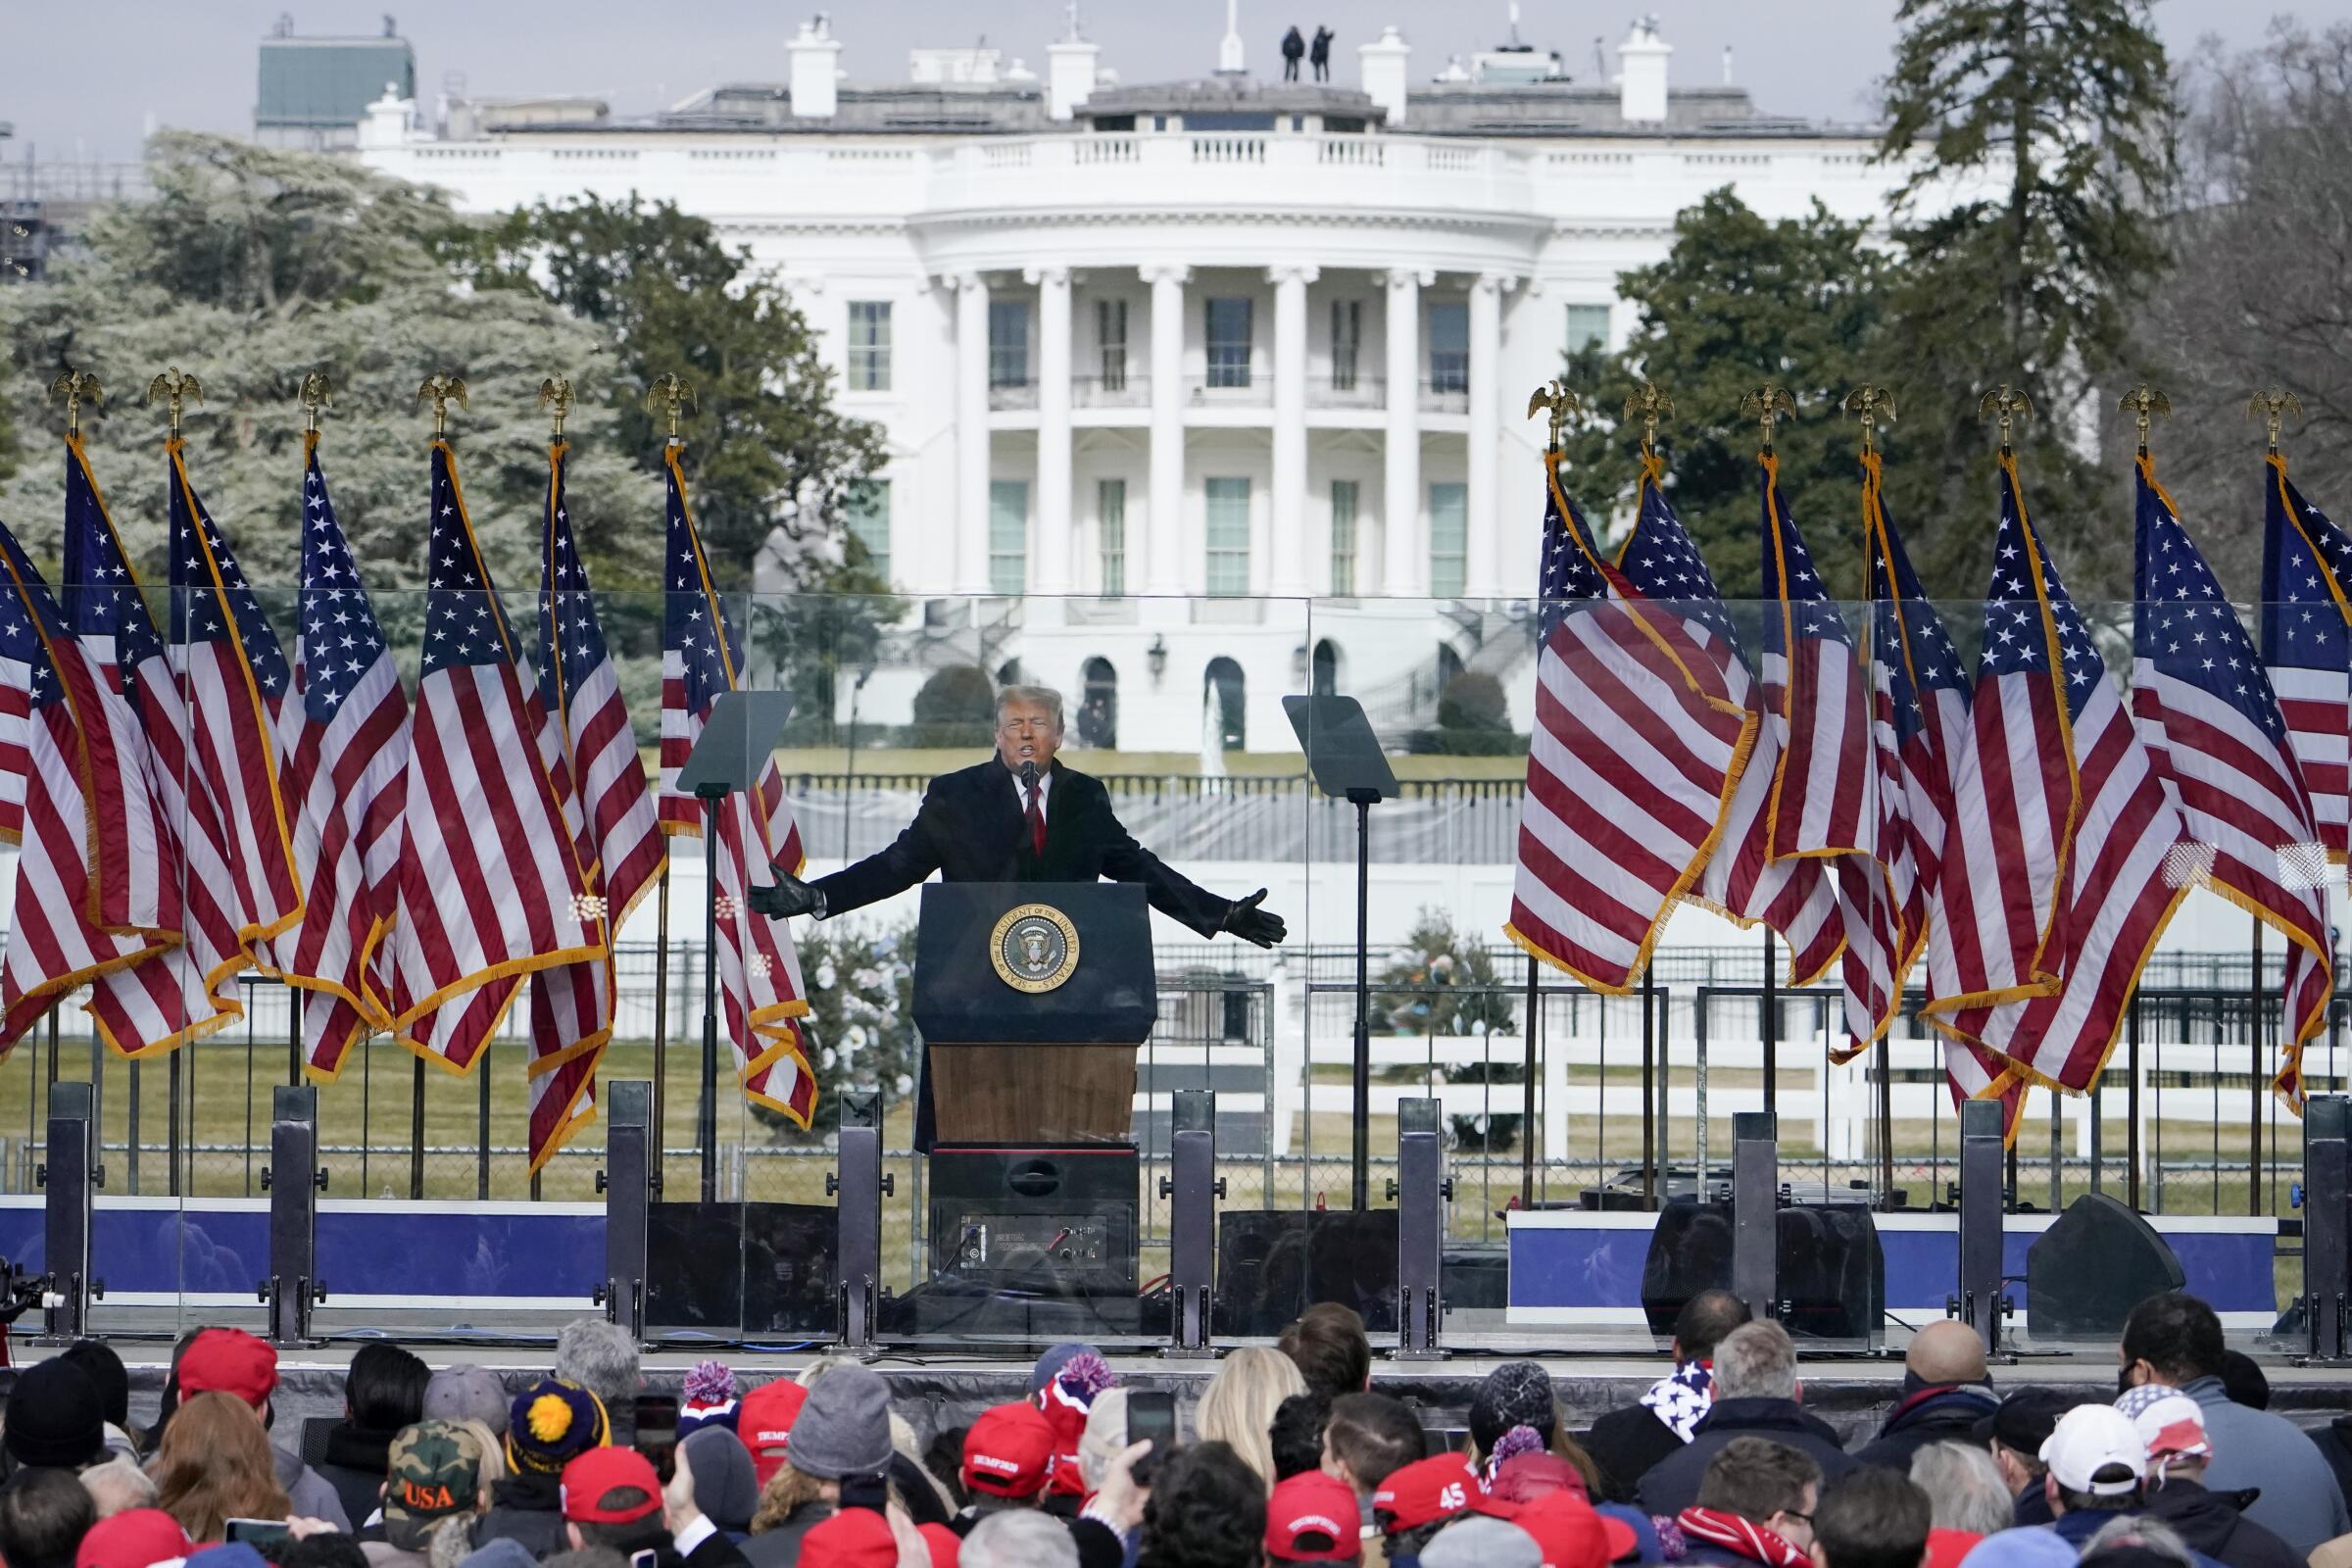 President Trump speaks at a rally in Washington on Jan. 6, 2021 